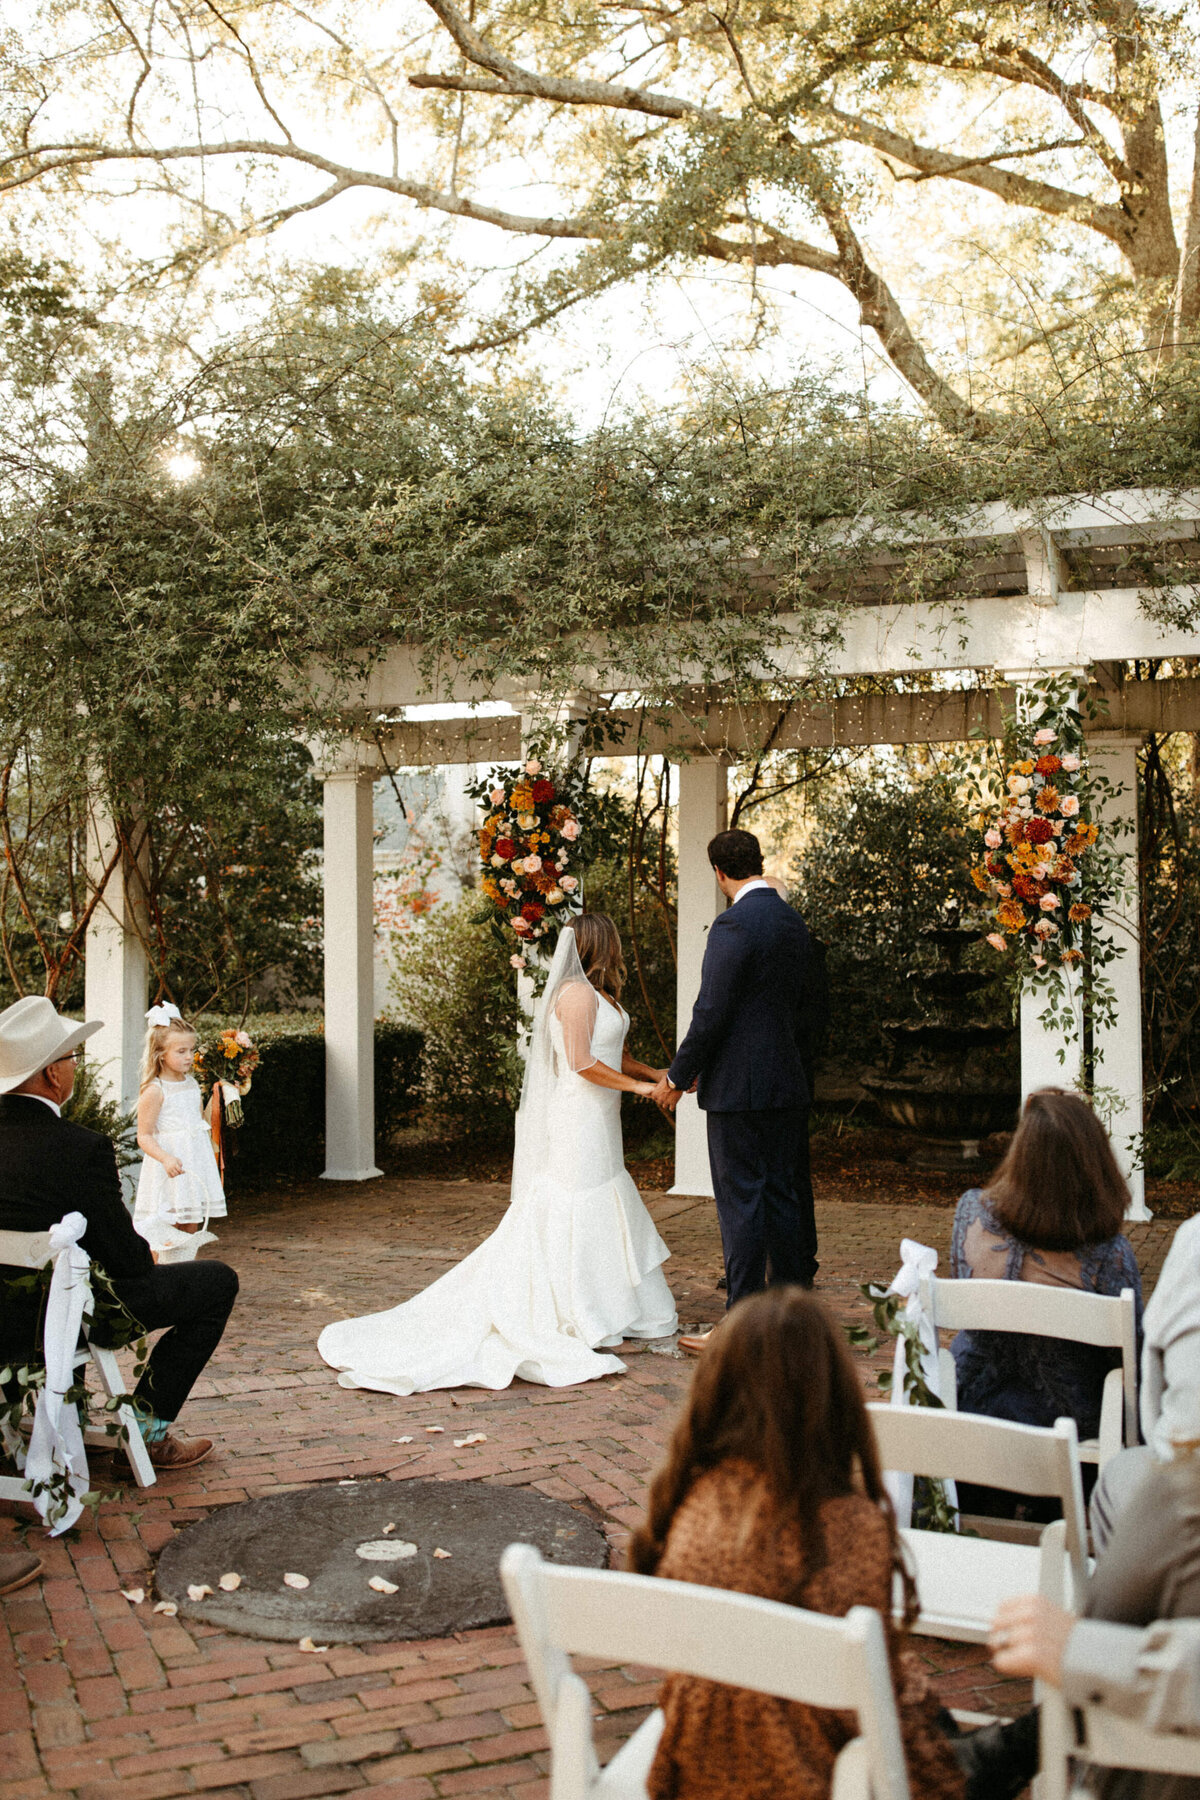 aberdeen-mississippi-tupelo-ms-the-magnolias-antebellum-home-wedding-venue-garden-ceremony5